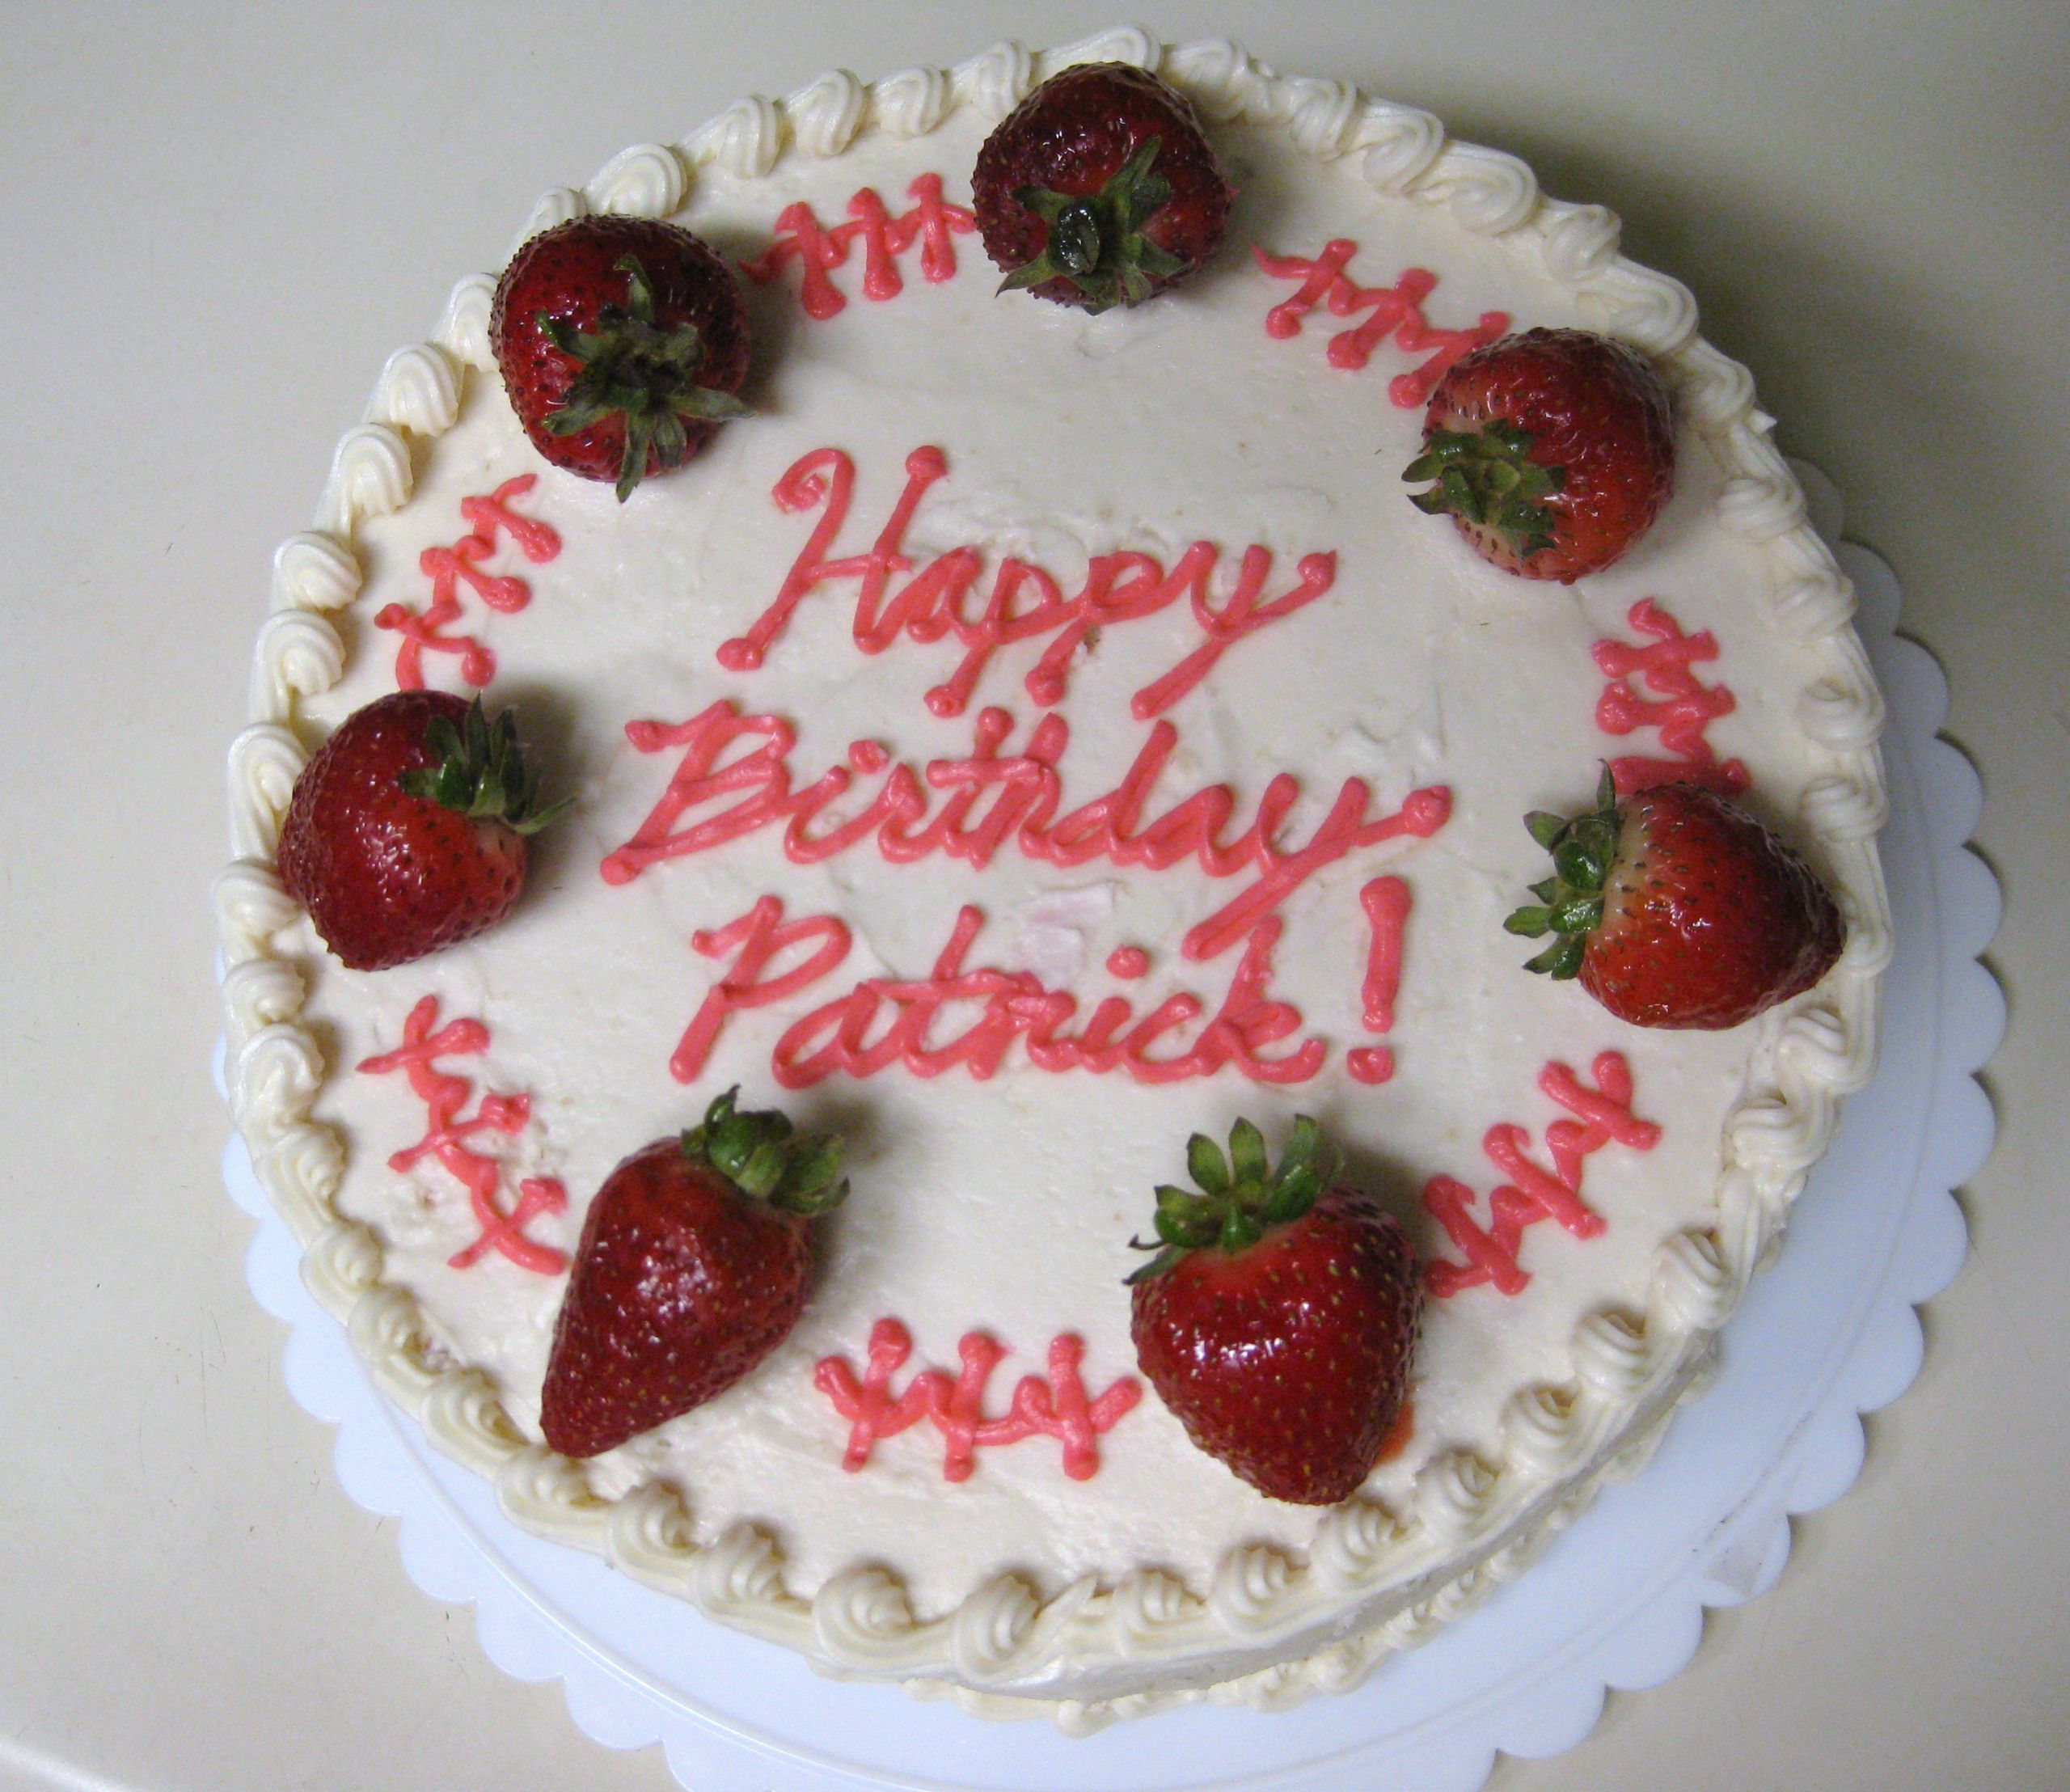 Happy Birthday Patrick Cake
 Patrick’s Birthday Cake